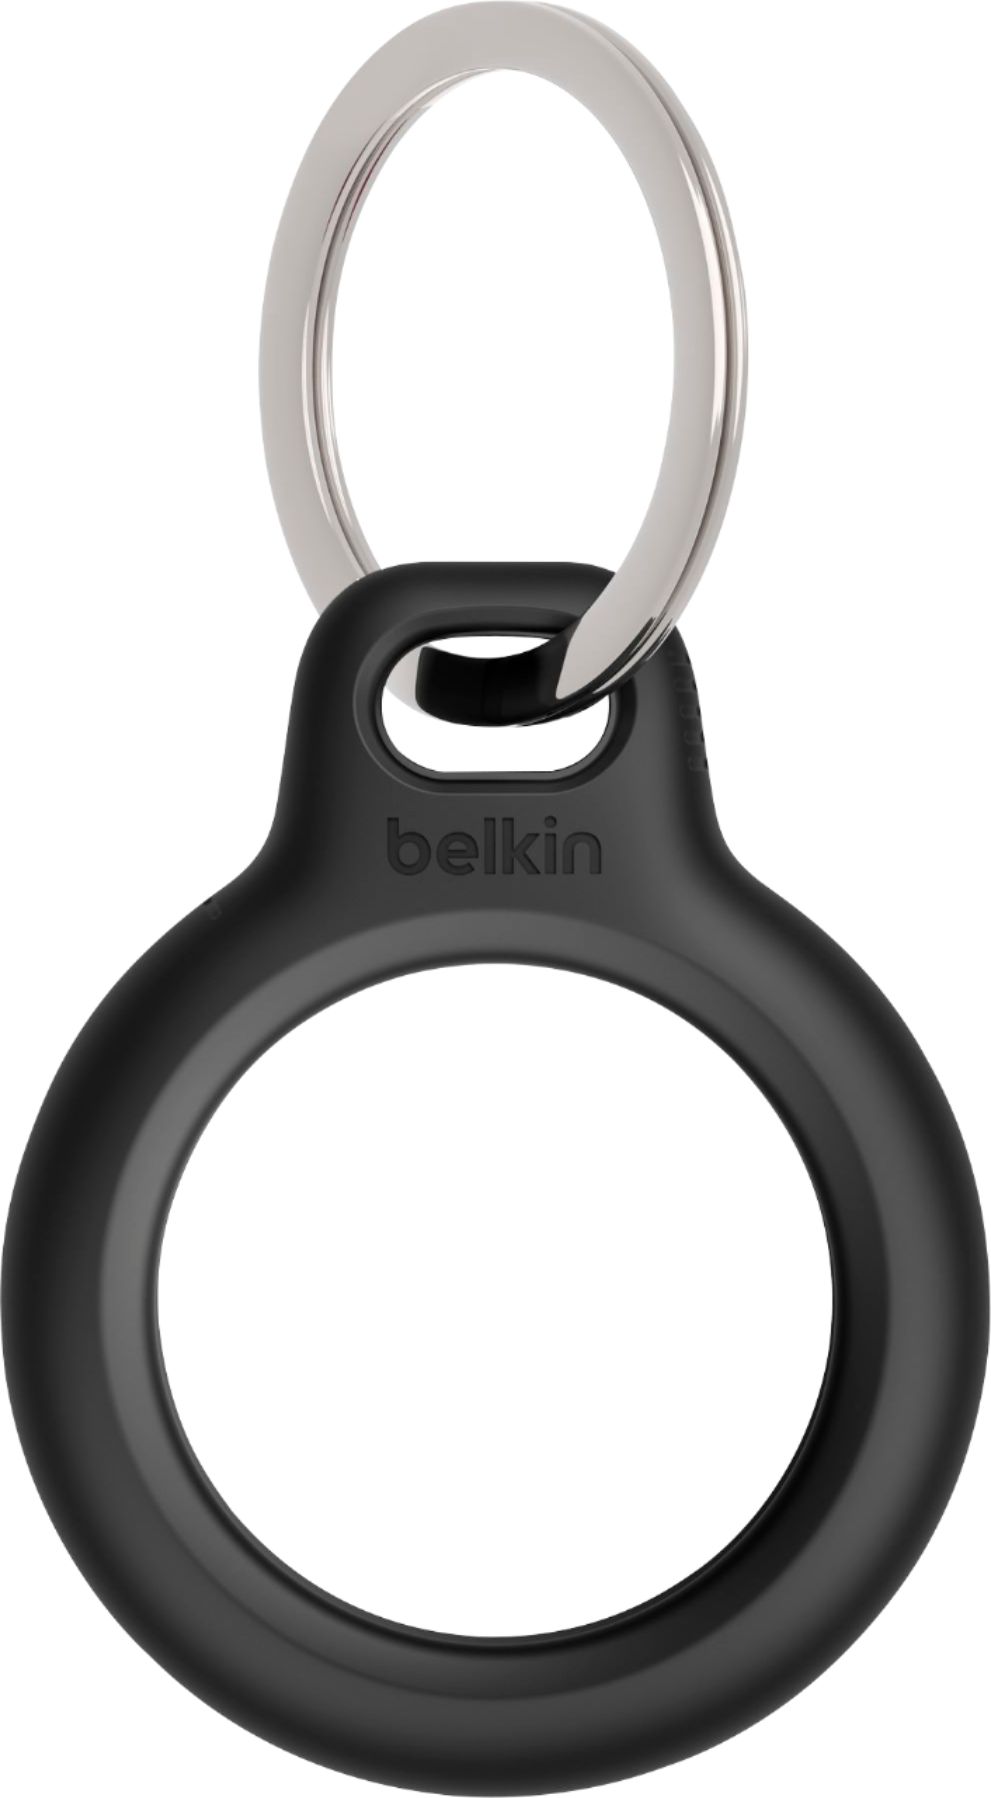 AirTag FineWoven Key Ring - Black - Apple